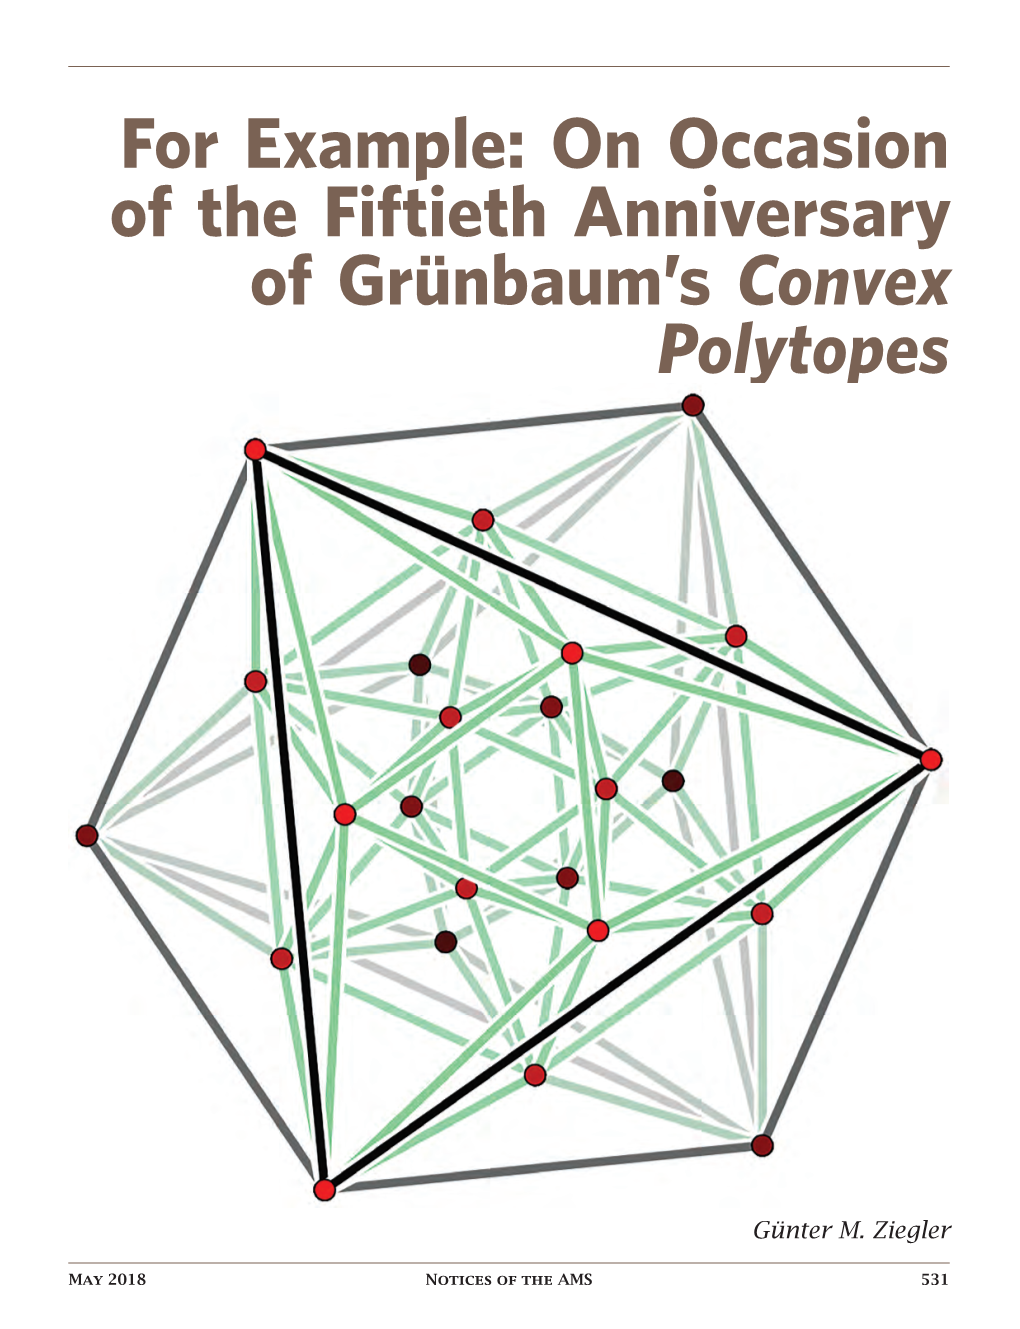 On Occasion of the Fiftieth Anniversary of Grünbaum's Convex